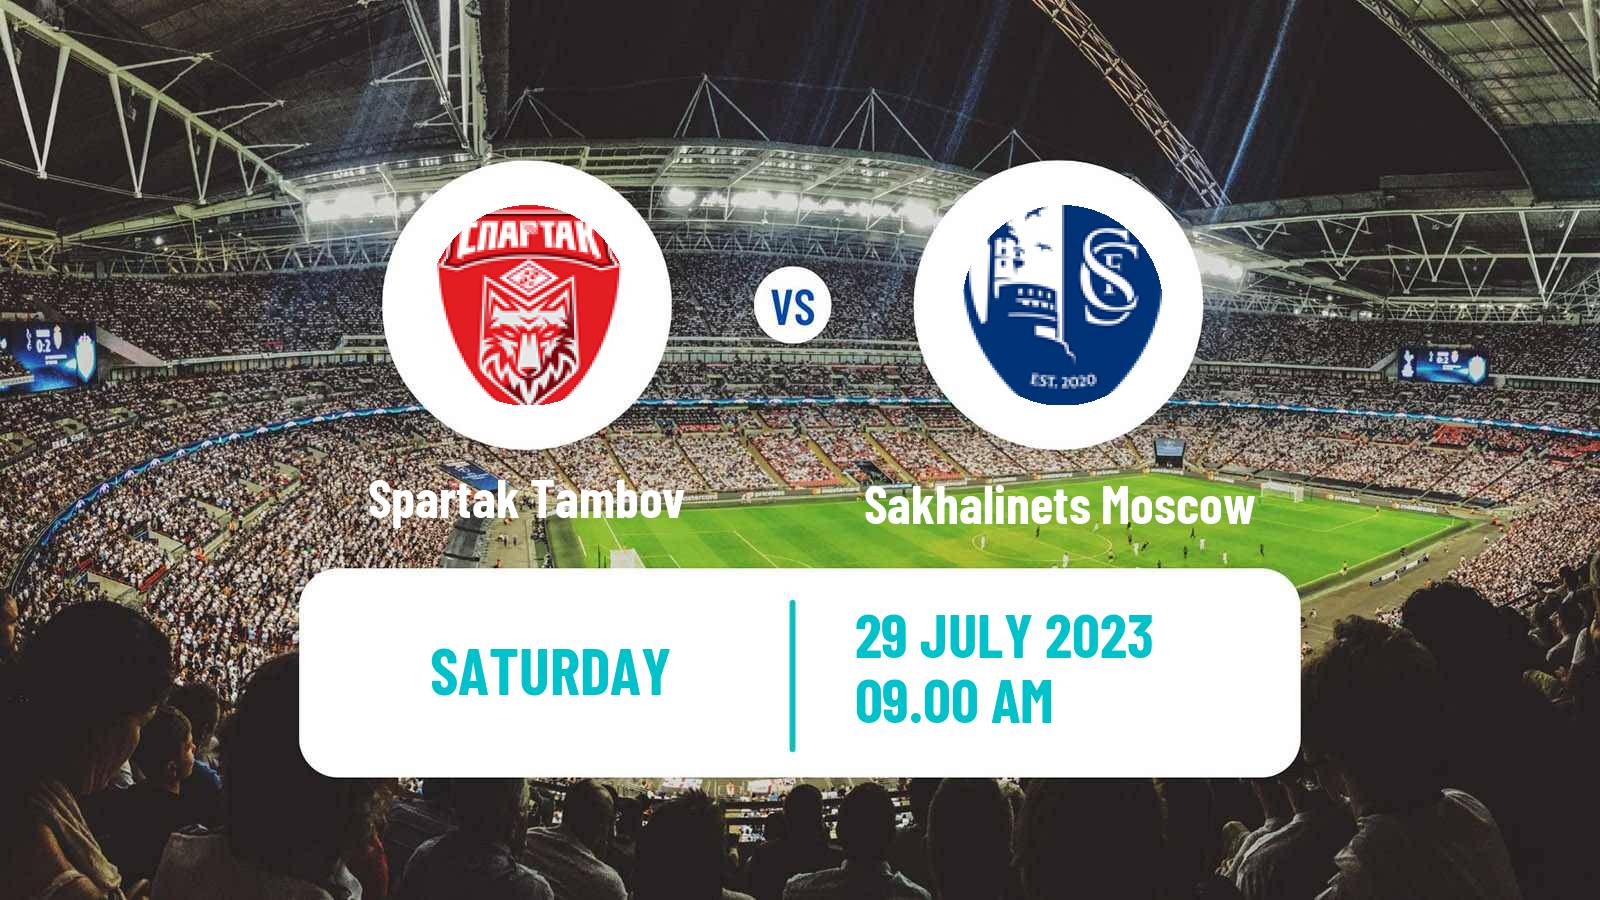 Soccer FNL 2 Division B Group 3 Spartak Tambov - Sakhalinets Moscow